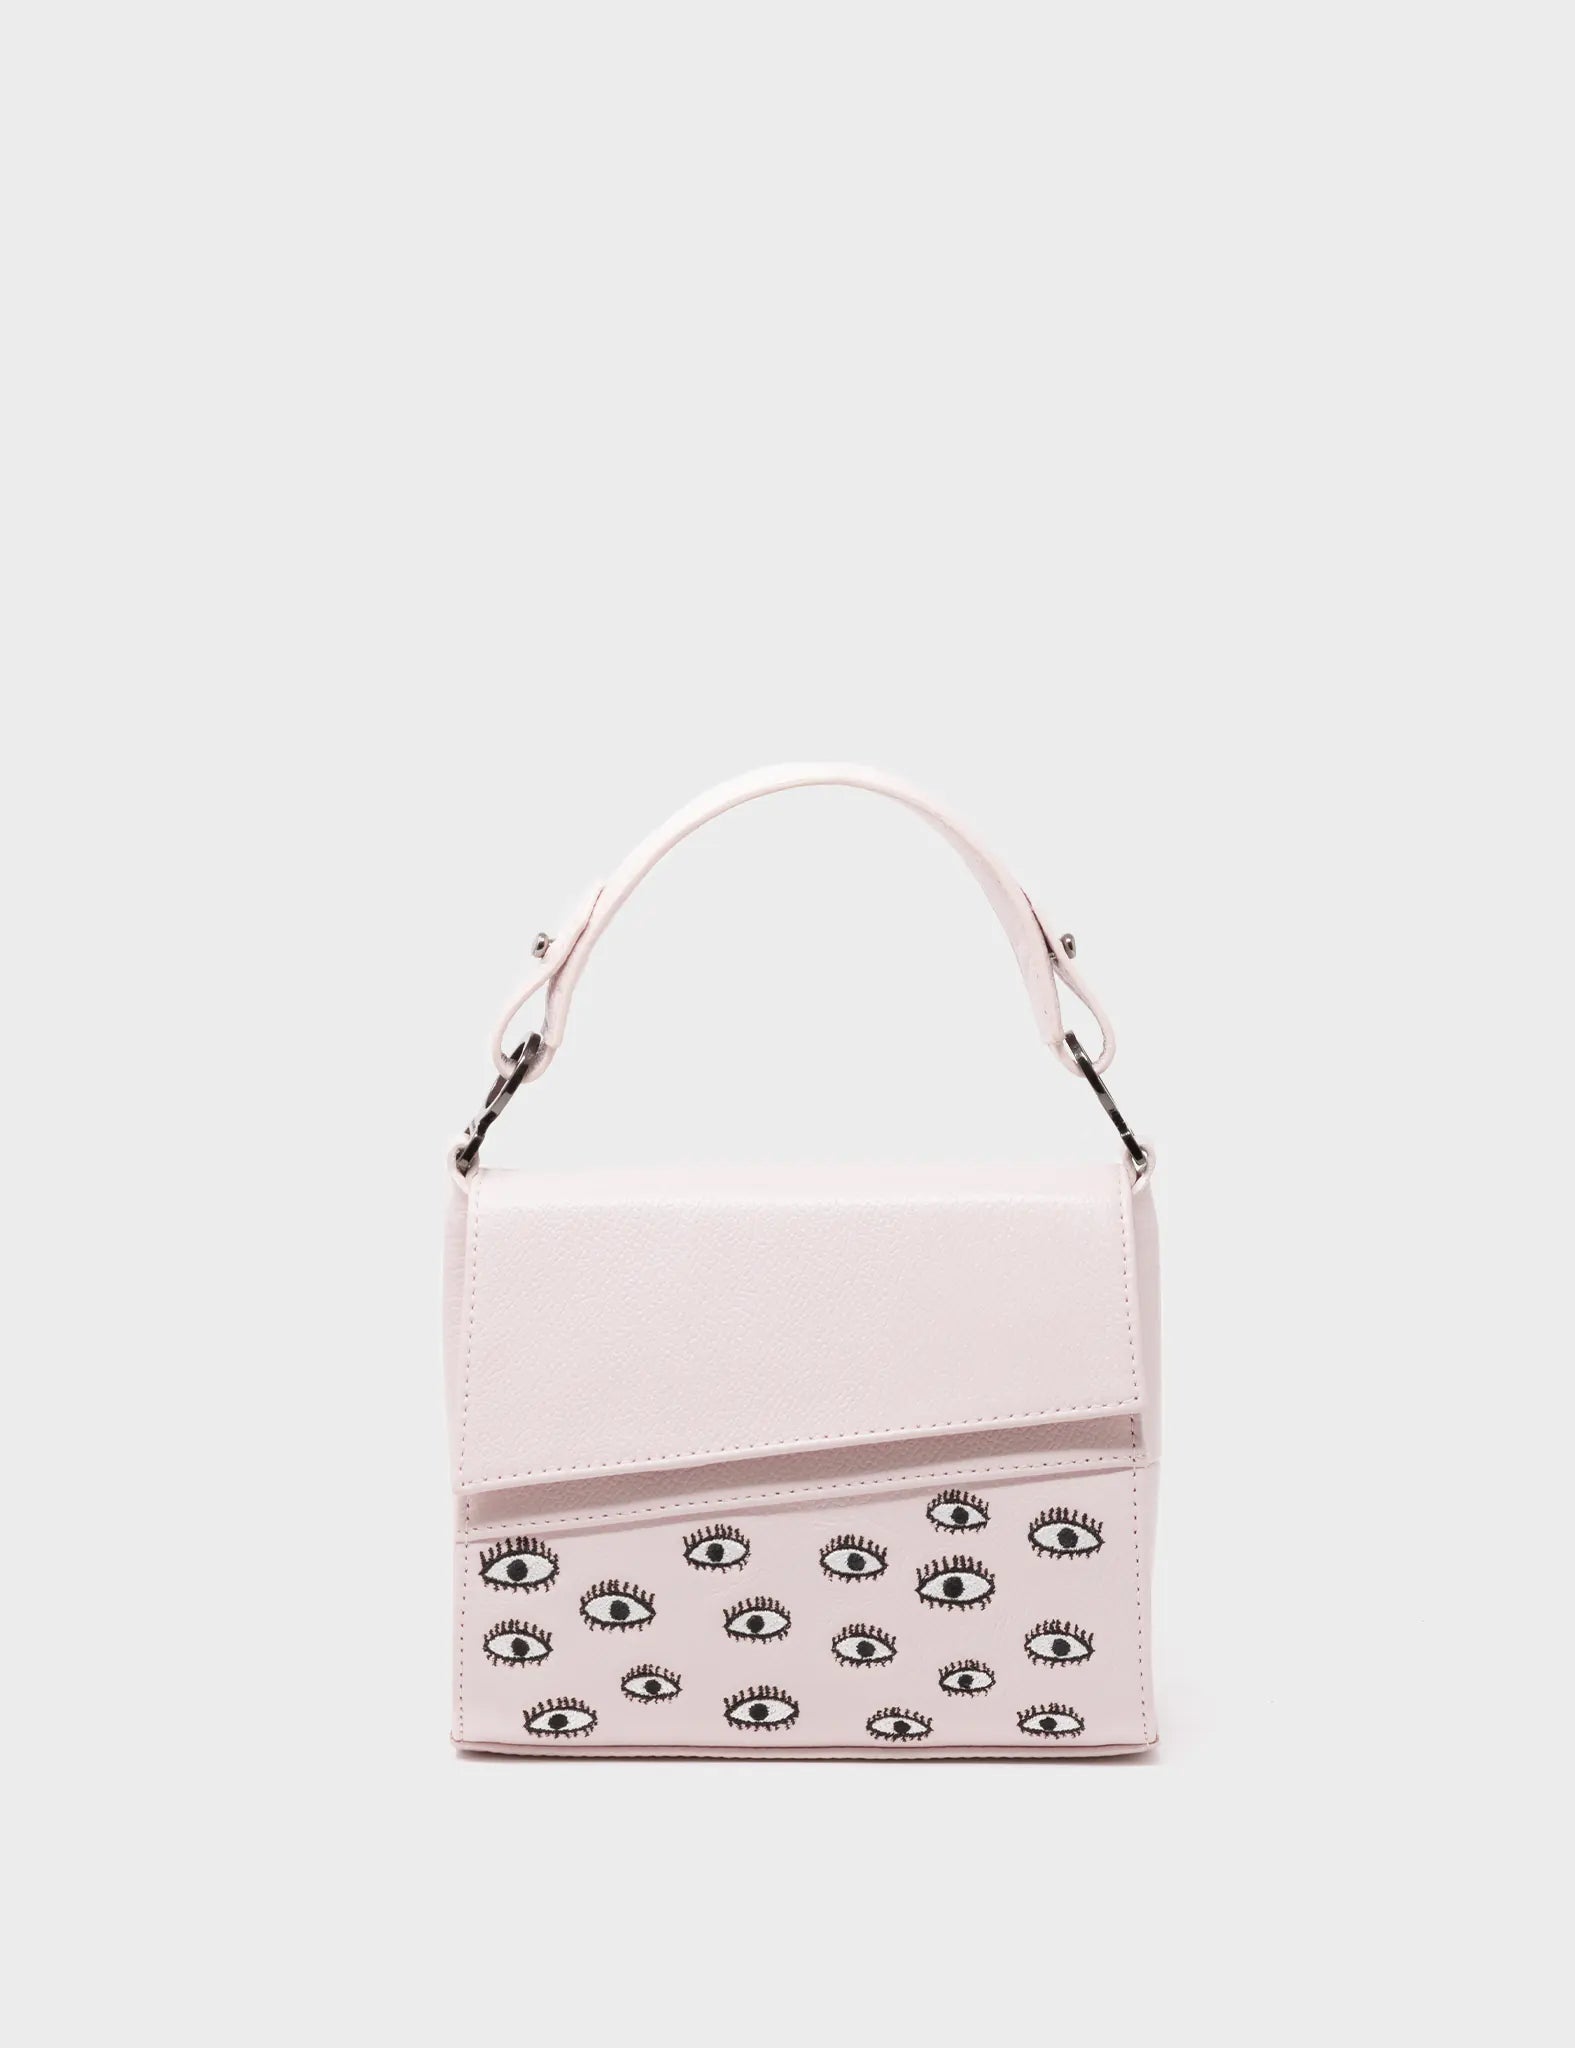 Anastasio Micro Crossbody Handbag Powder Pink Leather - Eyes Embroidery - front view